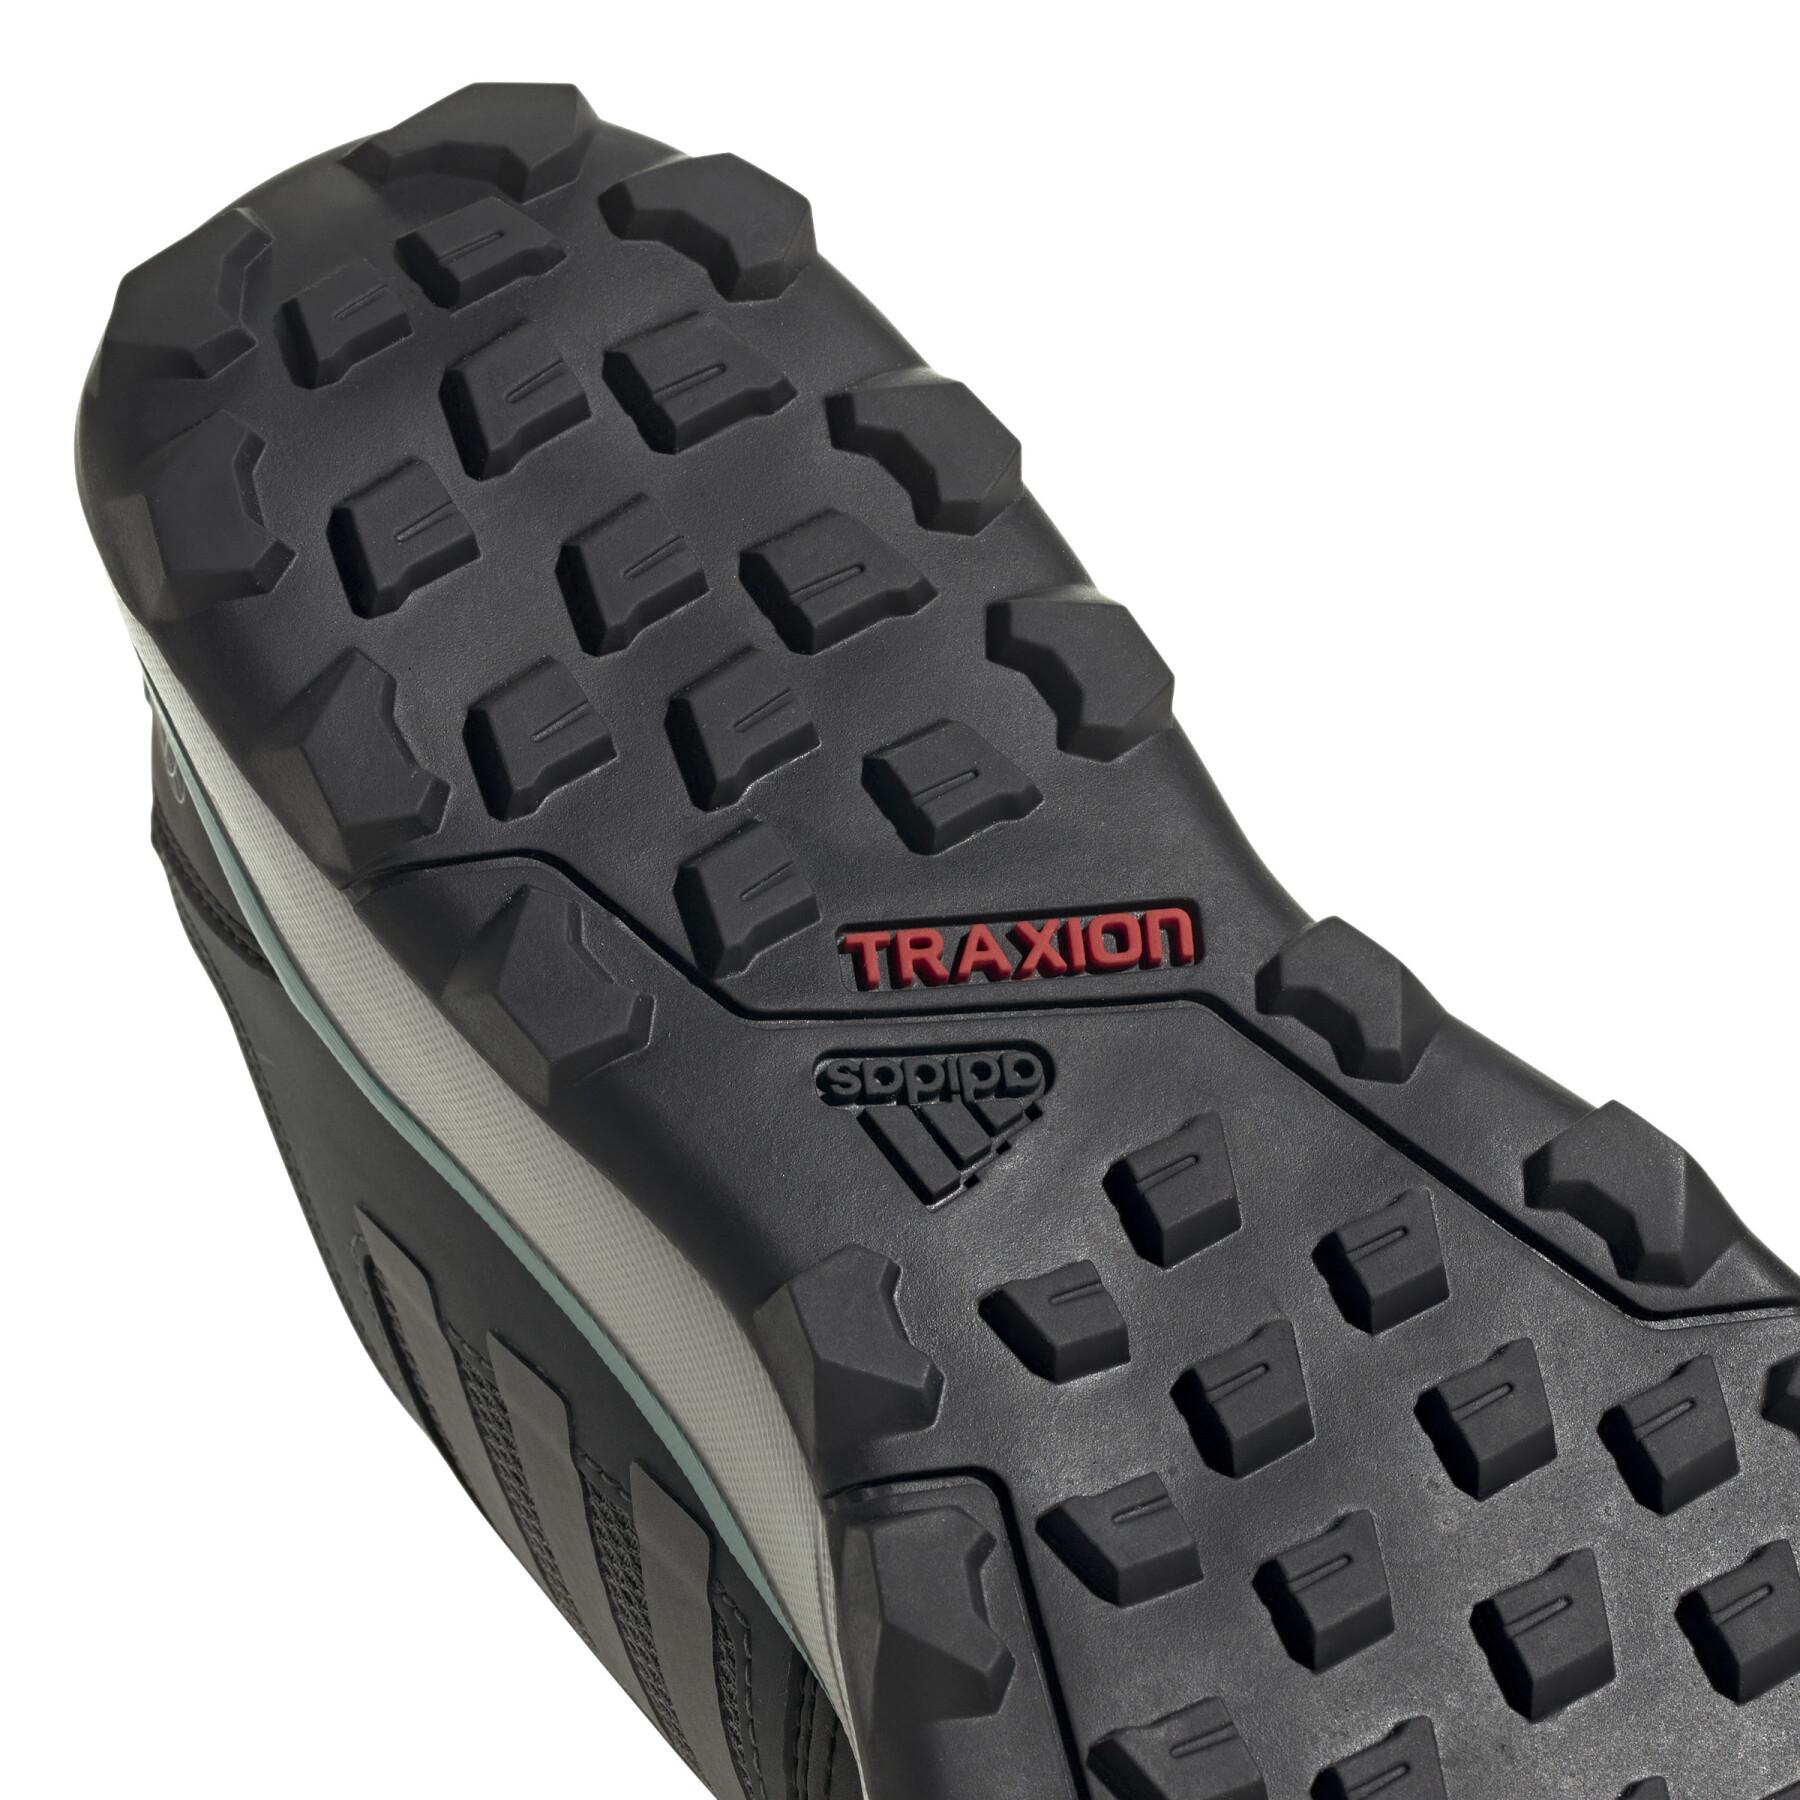 Buty trailowe dla kobiet adidas Terrex Tracerocker 2